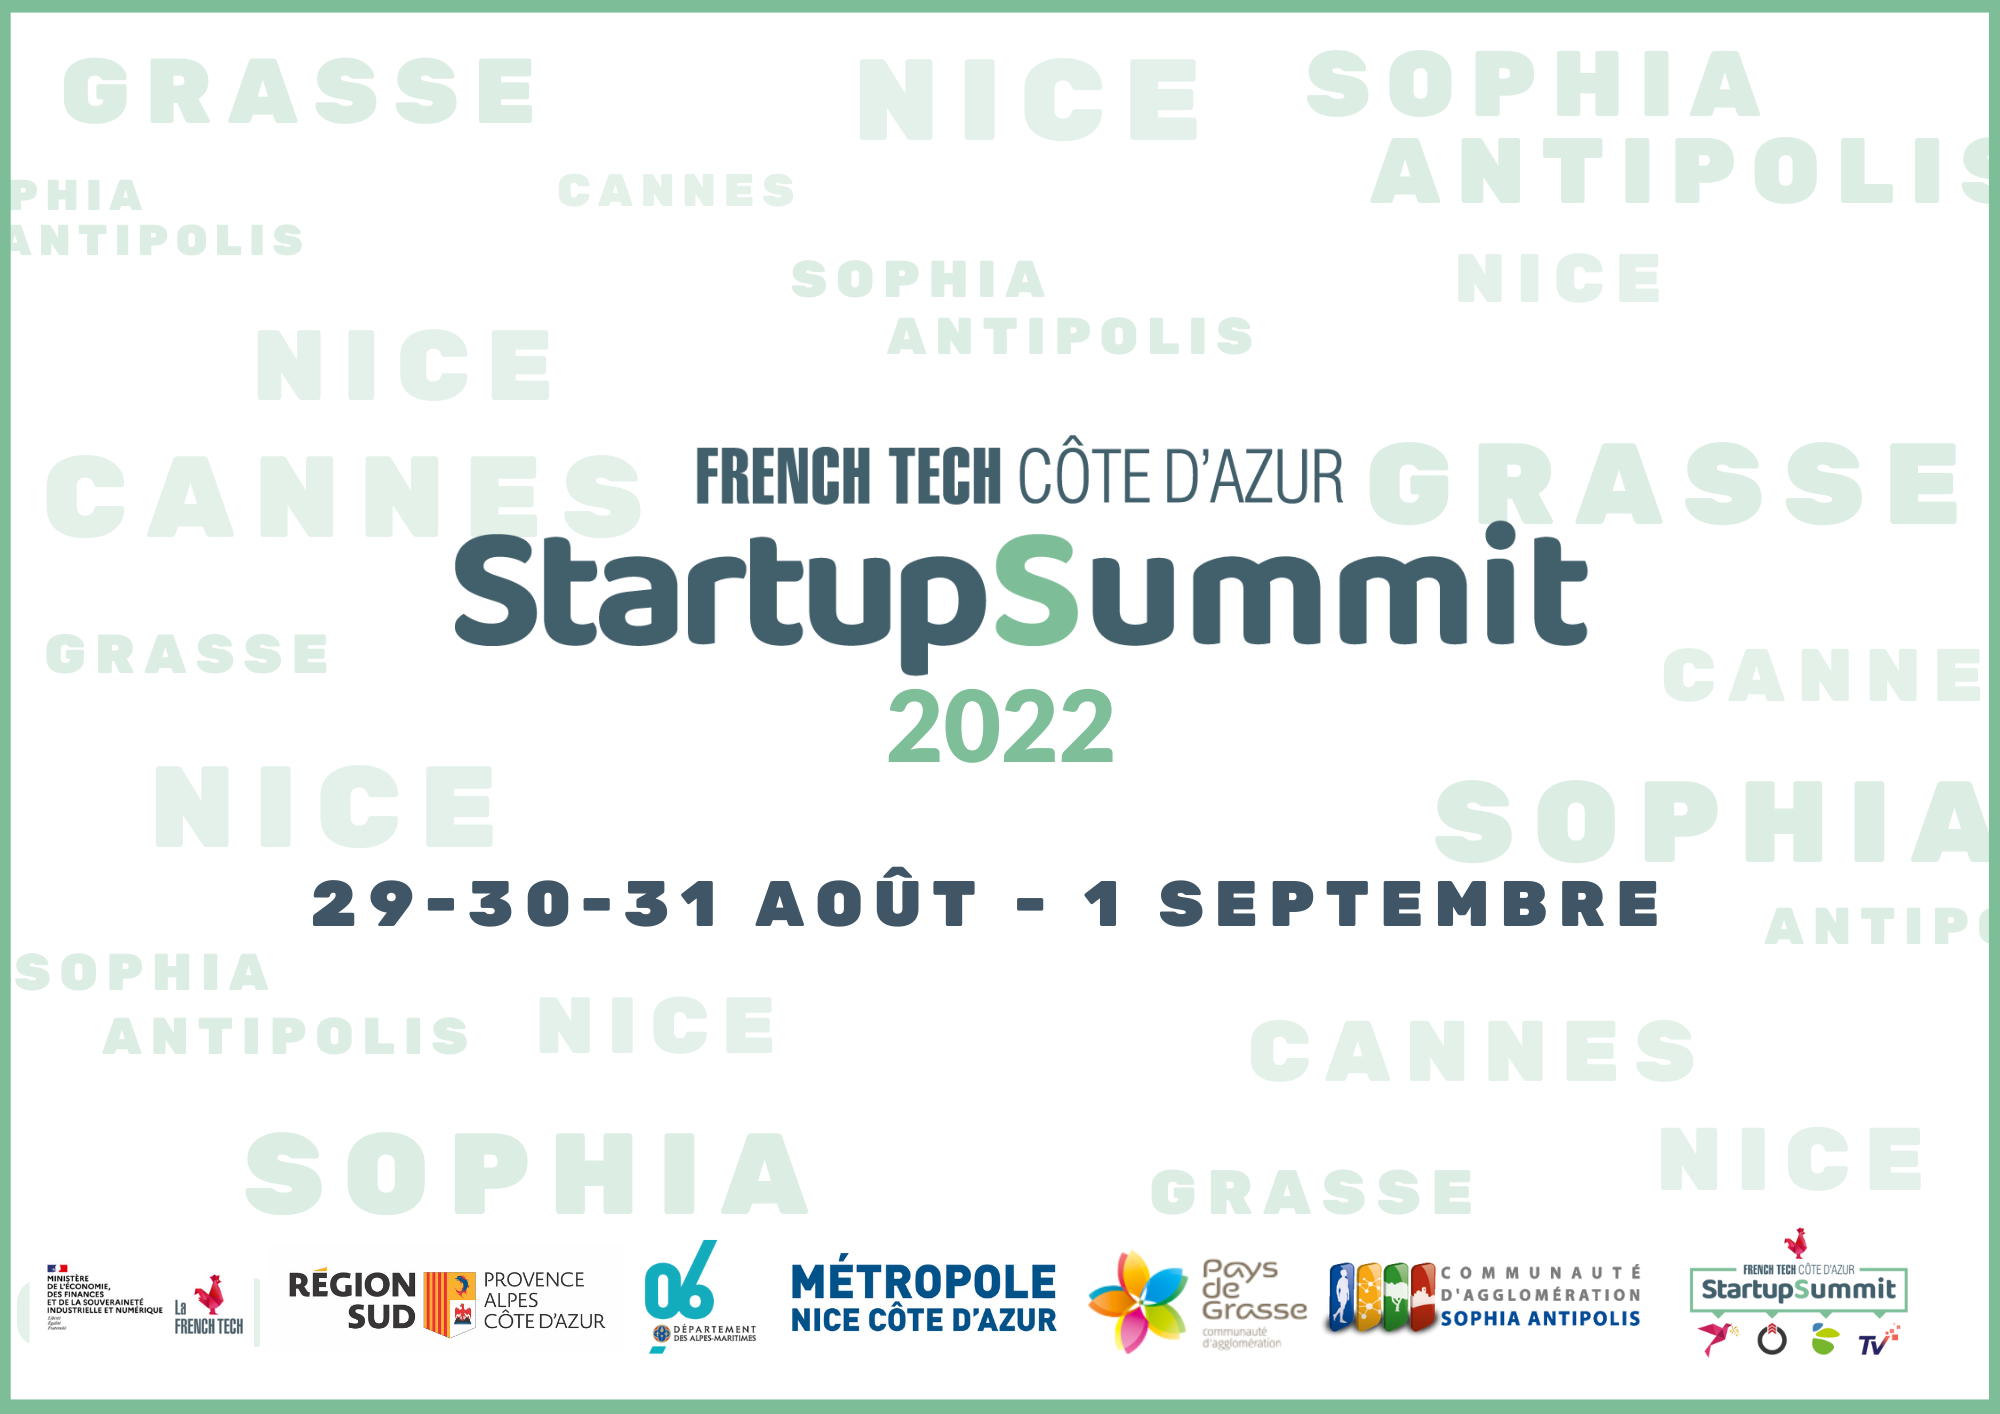 French Tech Côte d’Azur Startup Summit 2022